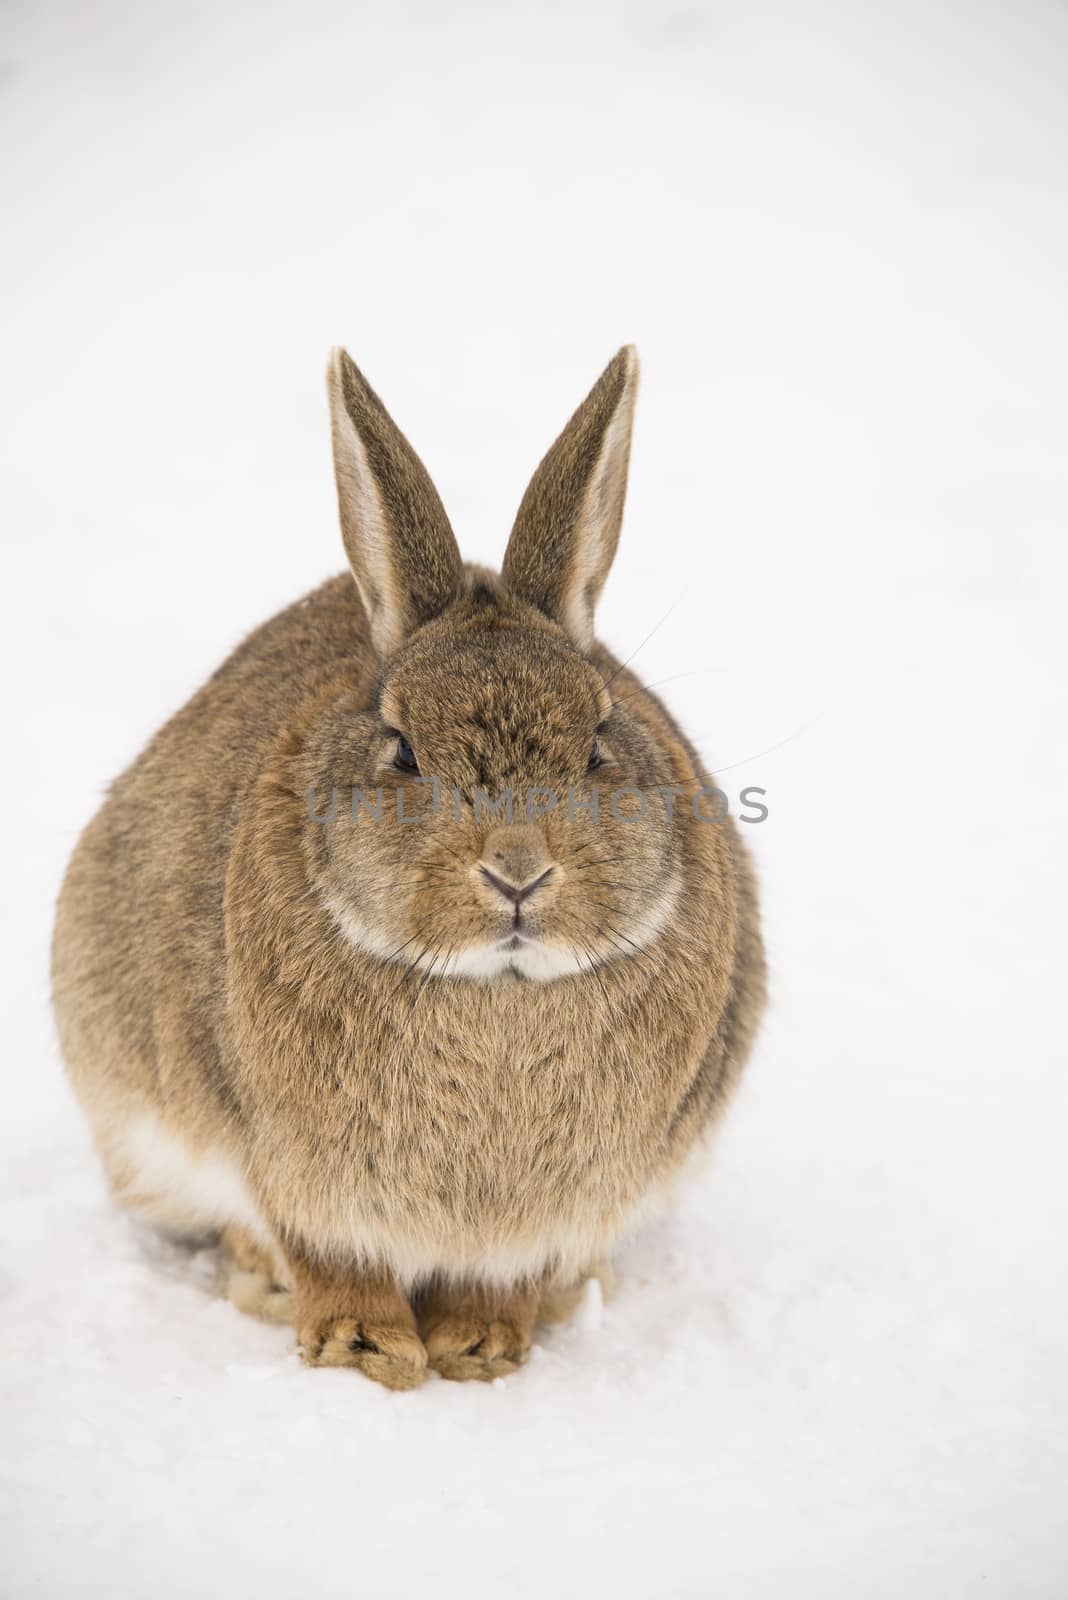 Rabbit in snow by GryT